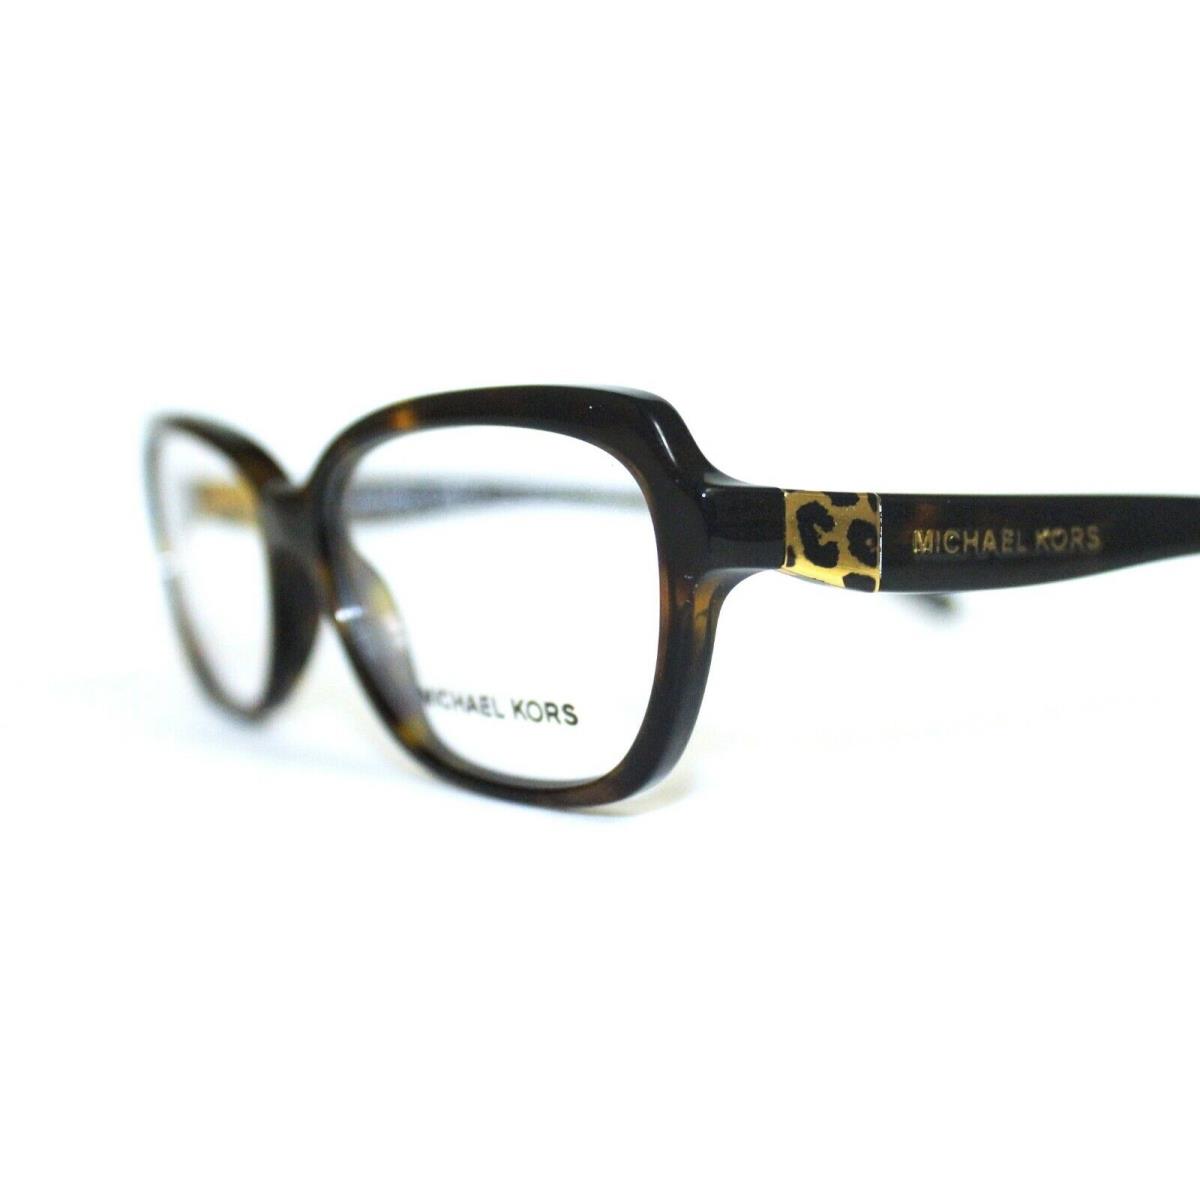 Michael Kors TABITHA V MK8016 Eyeglass Frames 309952  Blackblack Glitter  MK8016309952 at Amazon Mens Clothing store